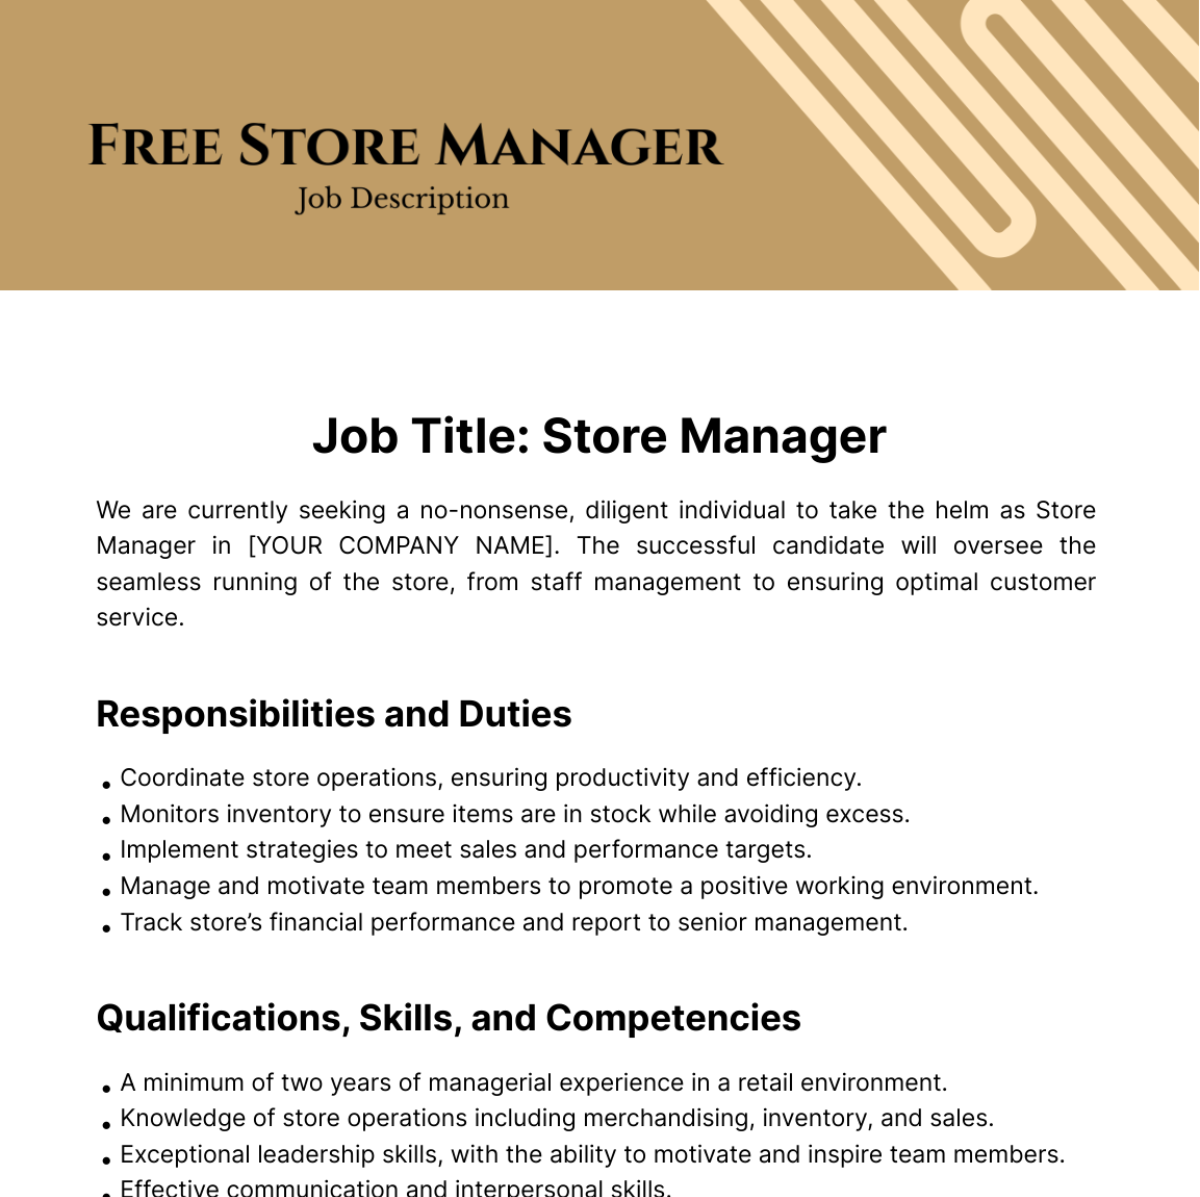 Free Store Manager Job Description Template